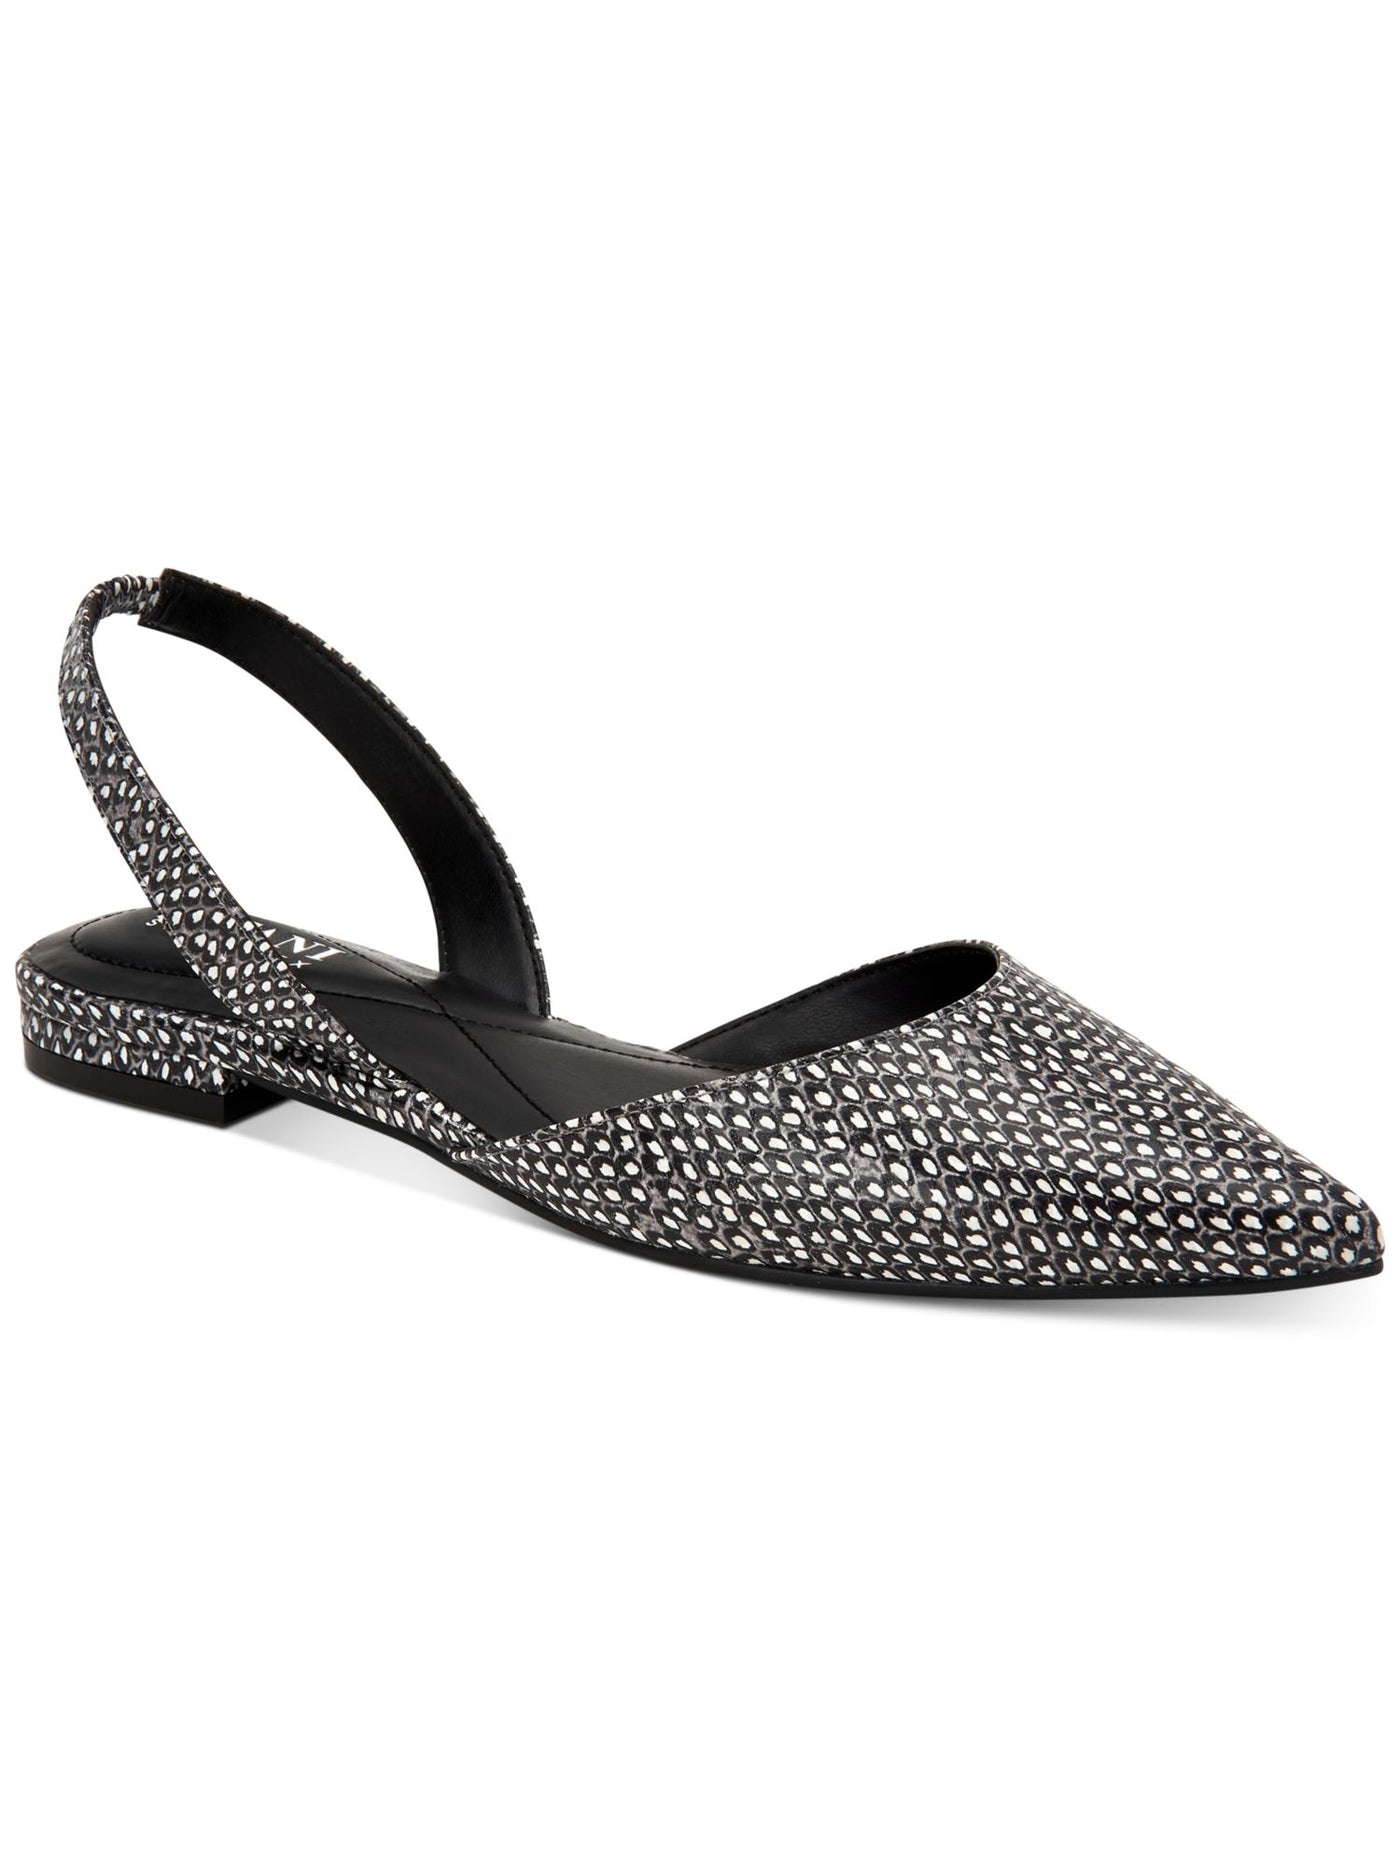 ALFANI Womens Black Snakeskin Cushioned Comfort Ryann Pointed Toe Block Heel Slip On Flats Shoes 8 M